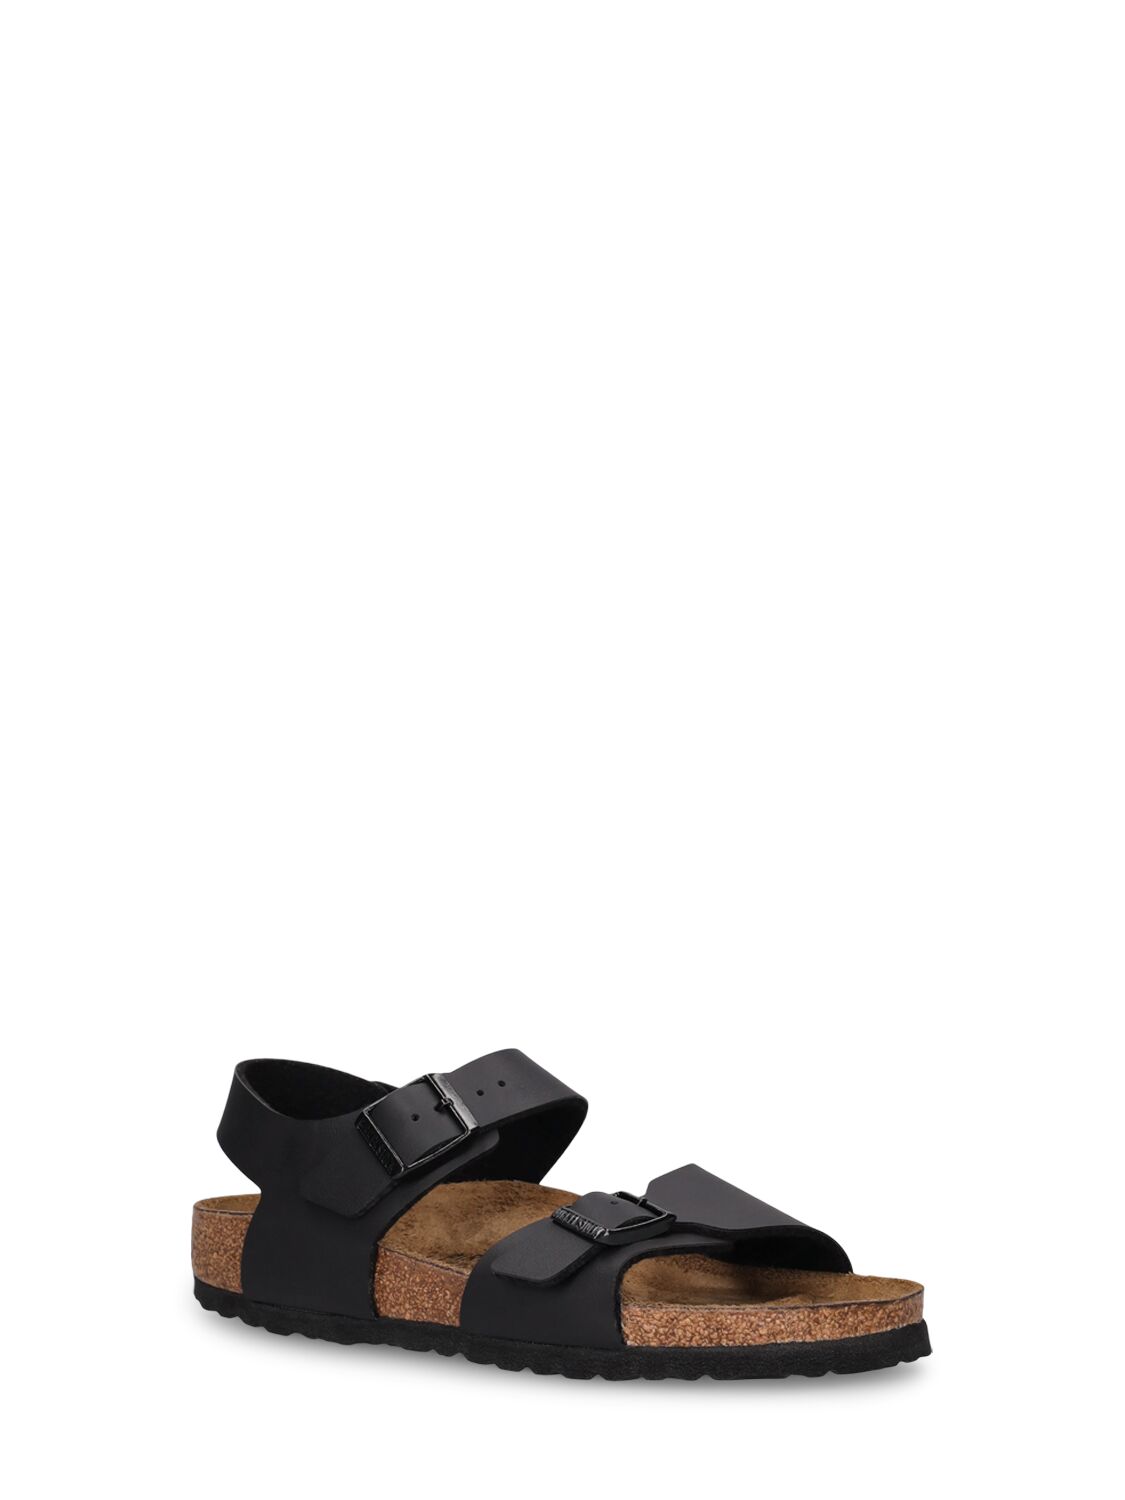 Shop Birkenstock New York Faux Leather Sandals In Black